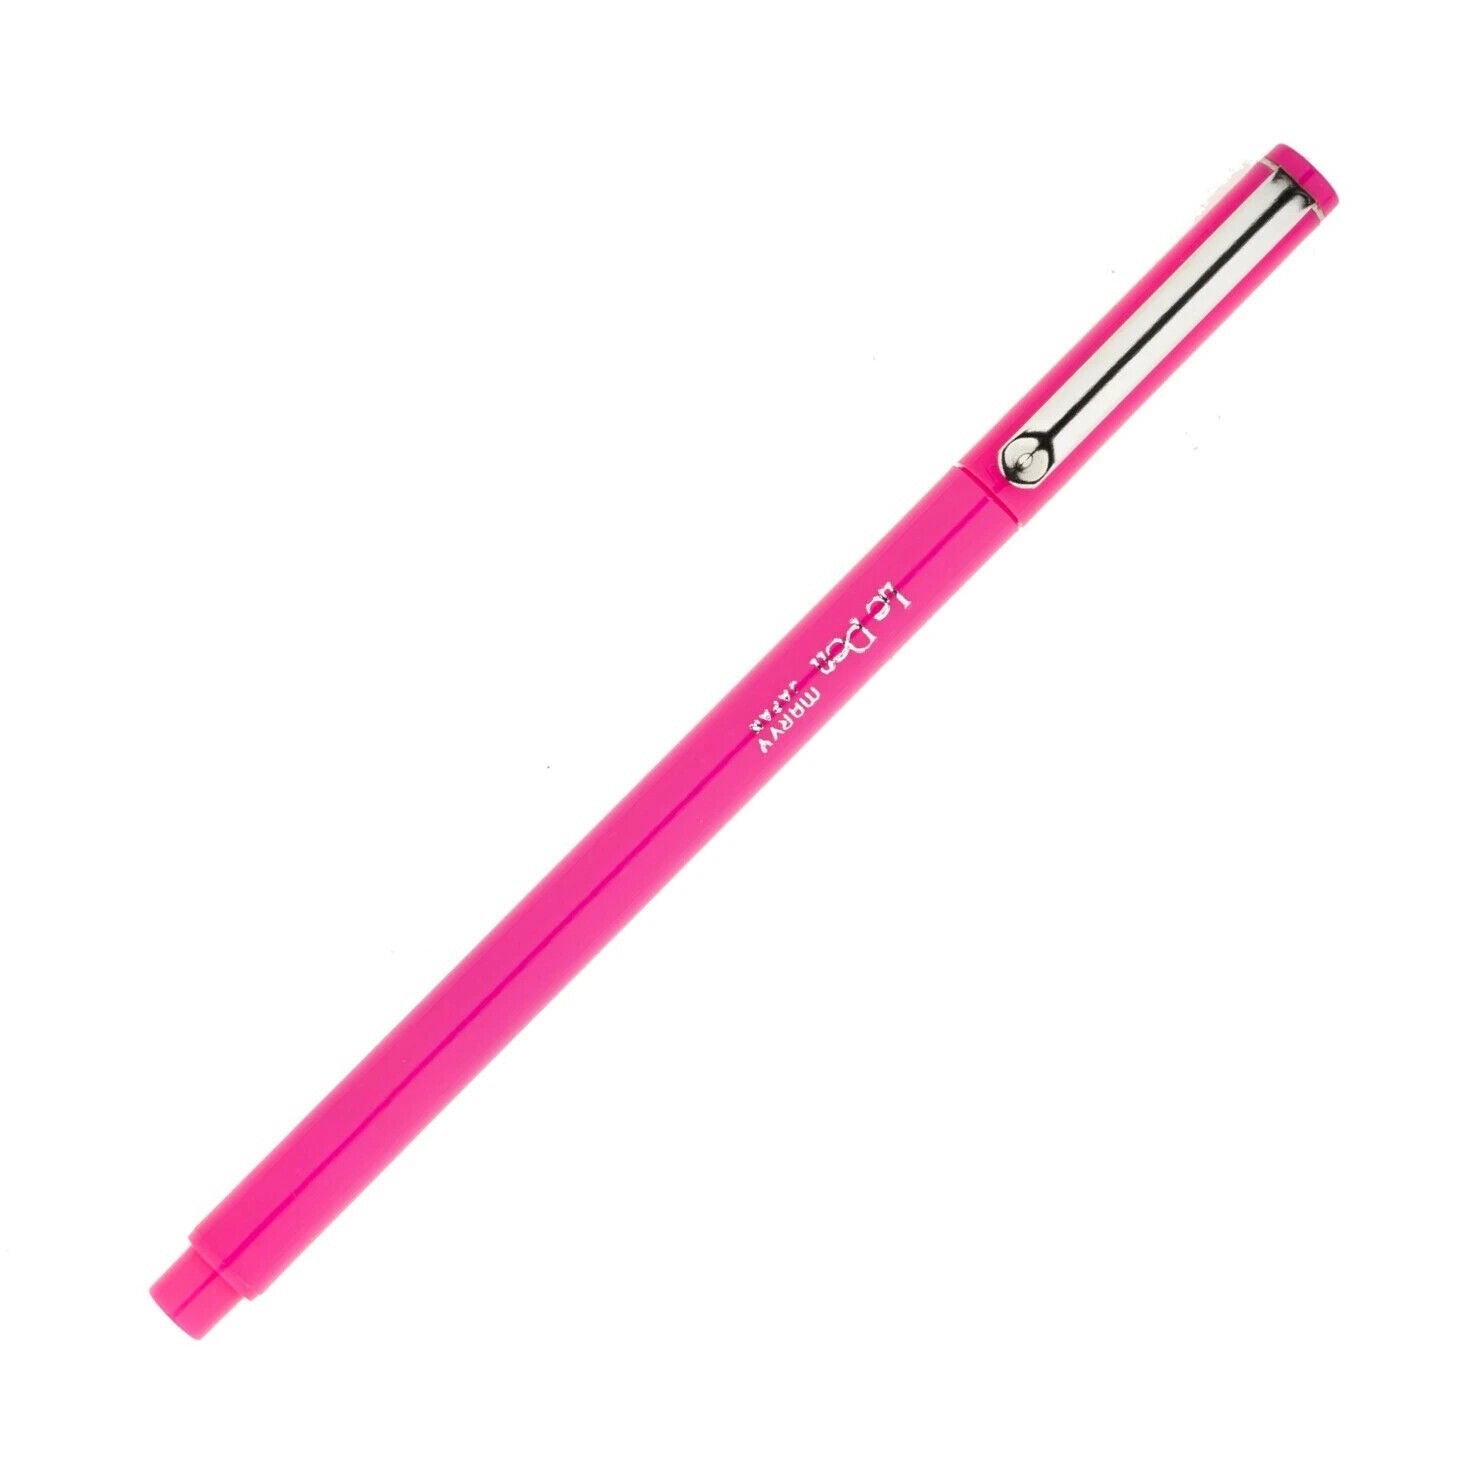 Pink pen diagonally placed across a white background. pen has silver clip on the cap